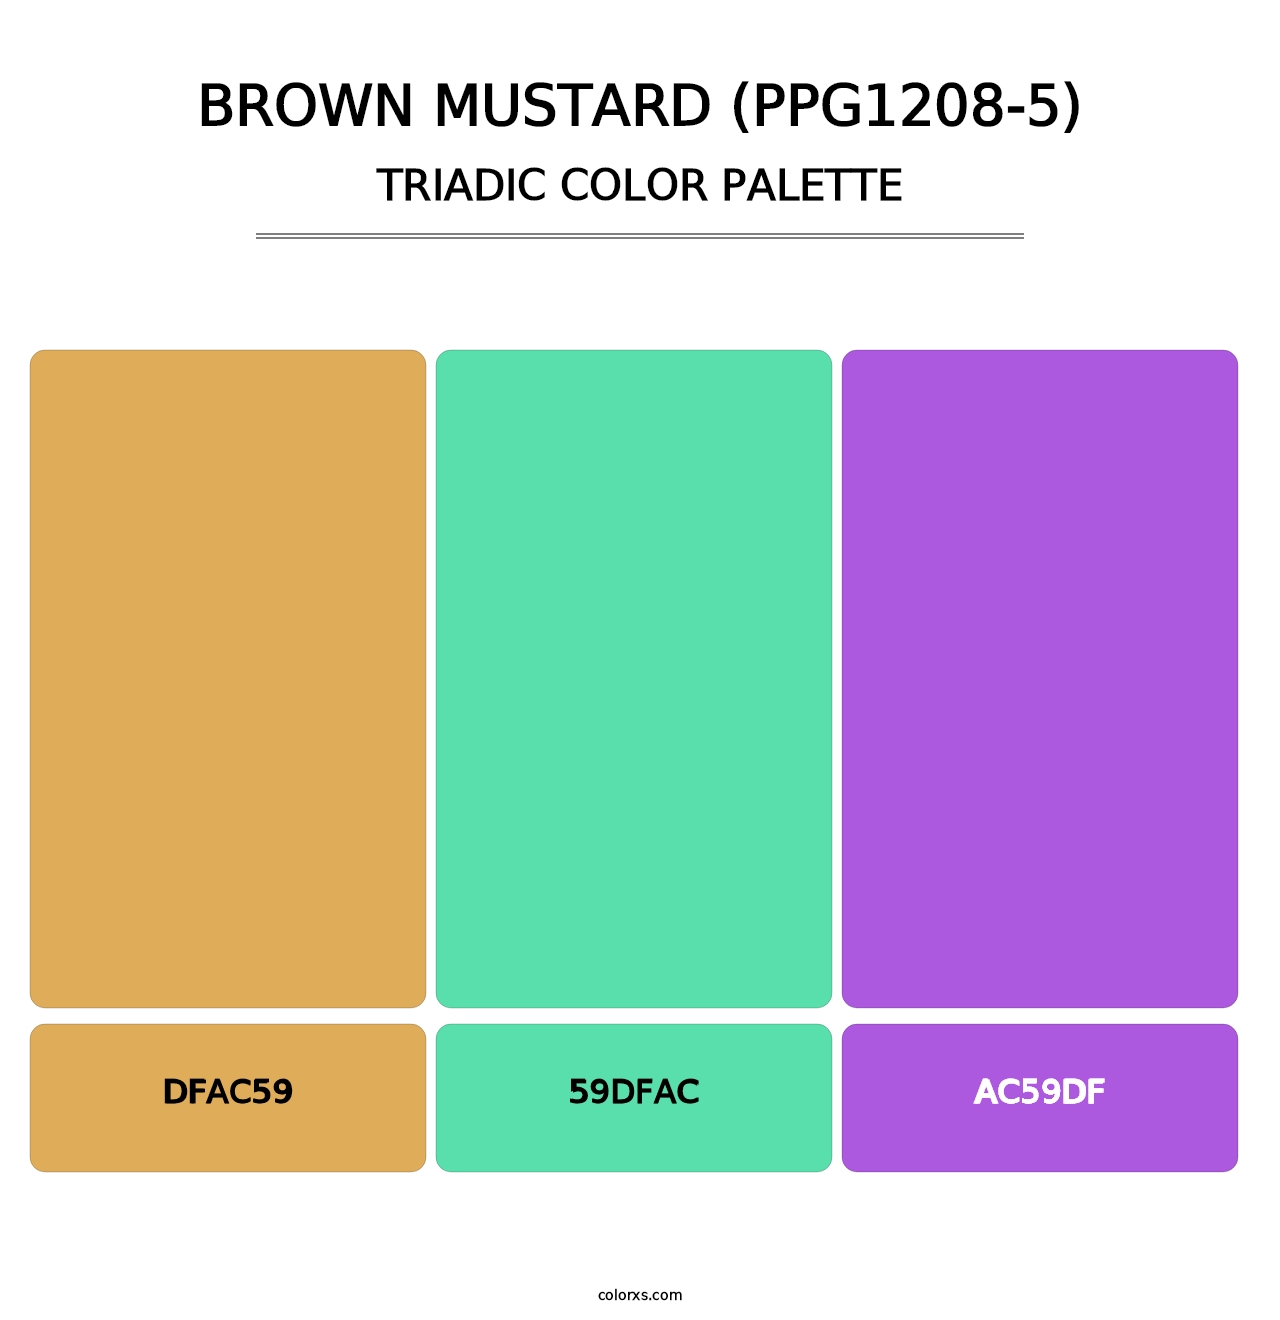 Brown Mustard (PPG1208-5) - Triadic Color Palette